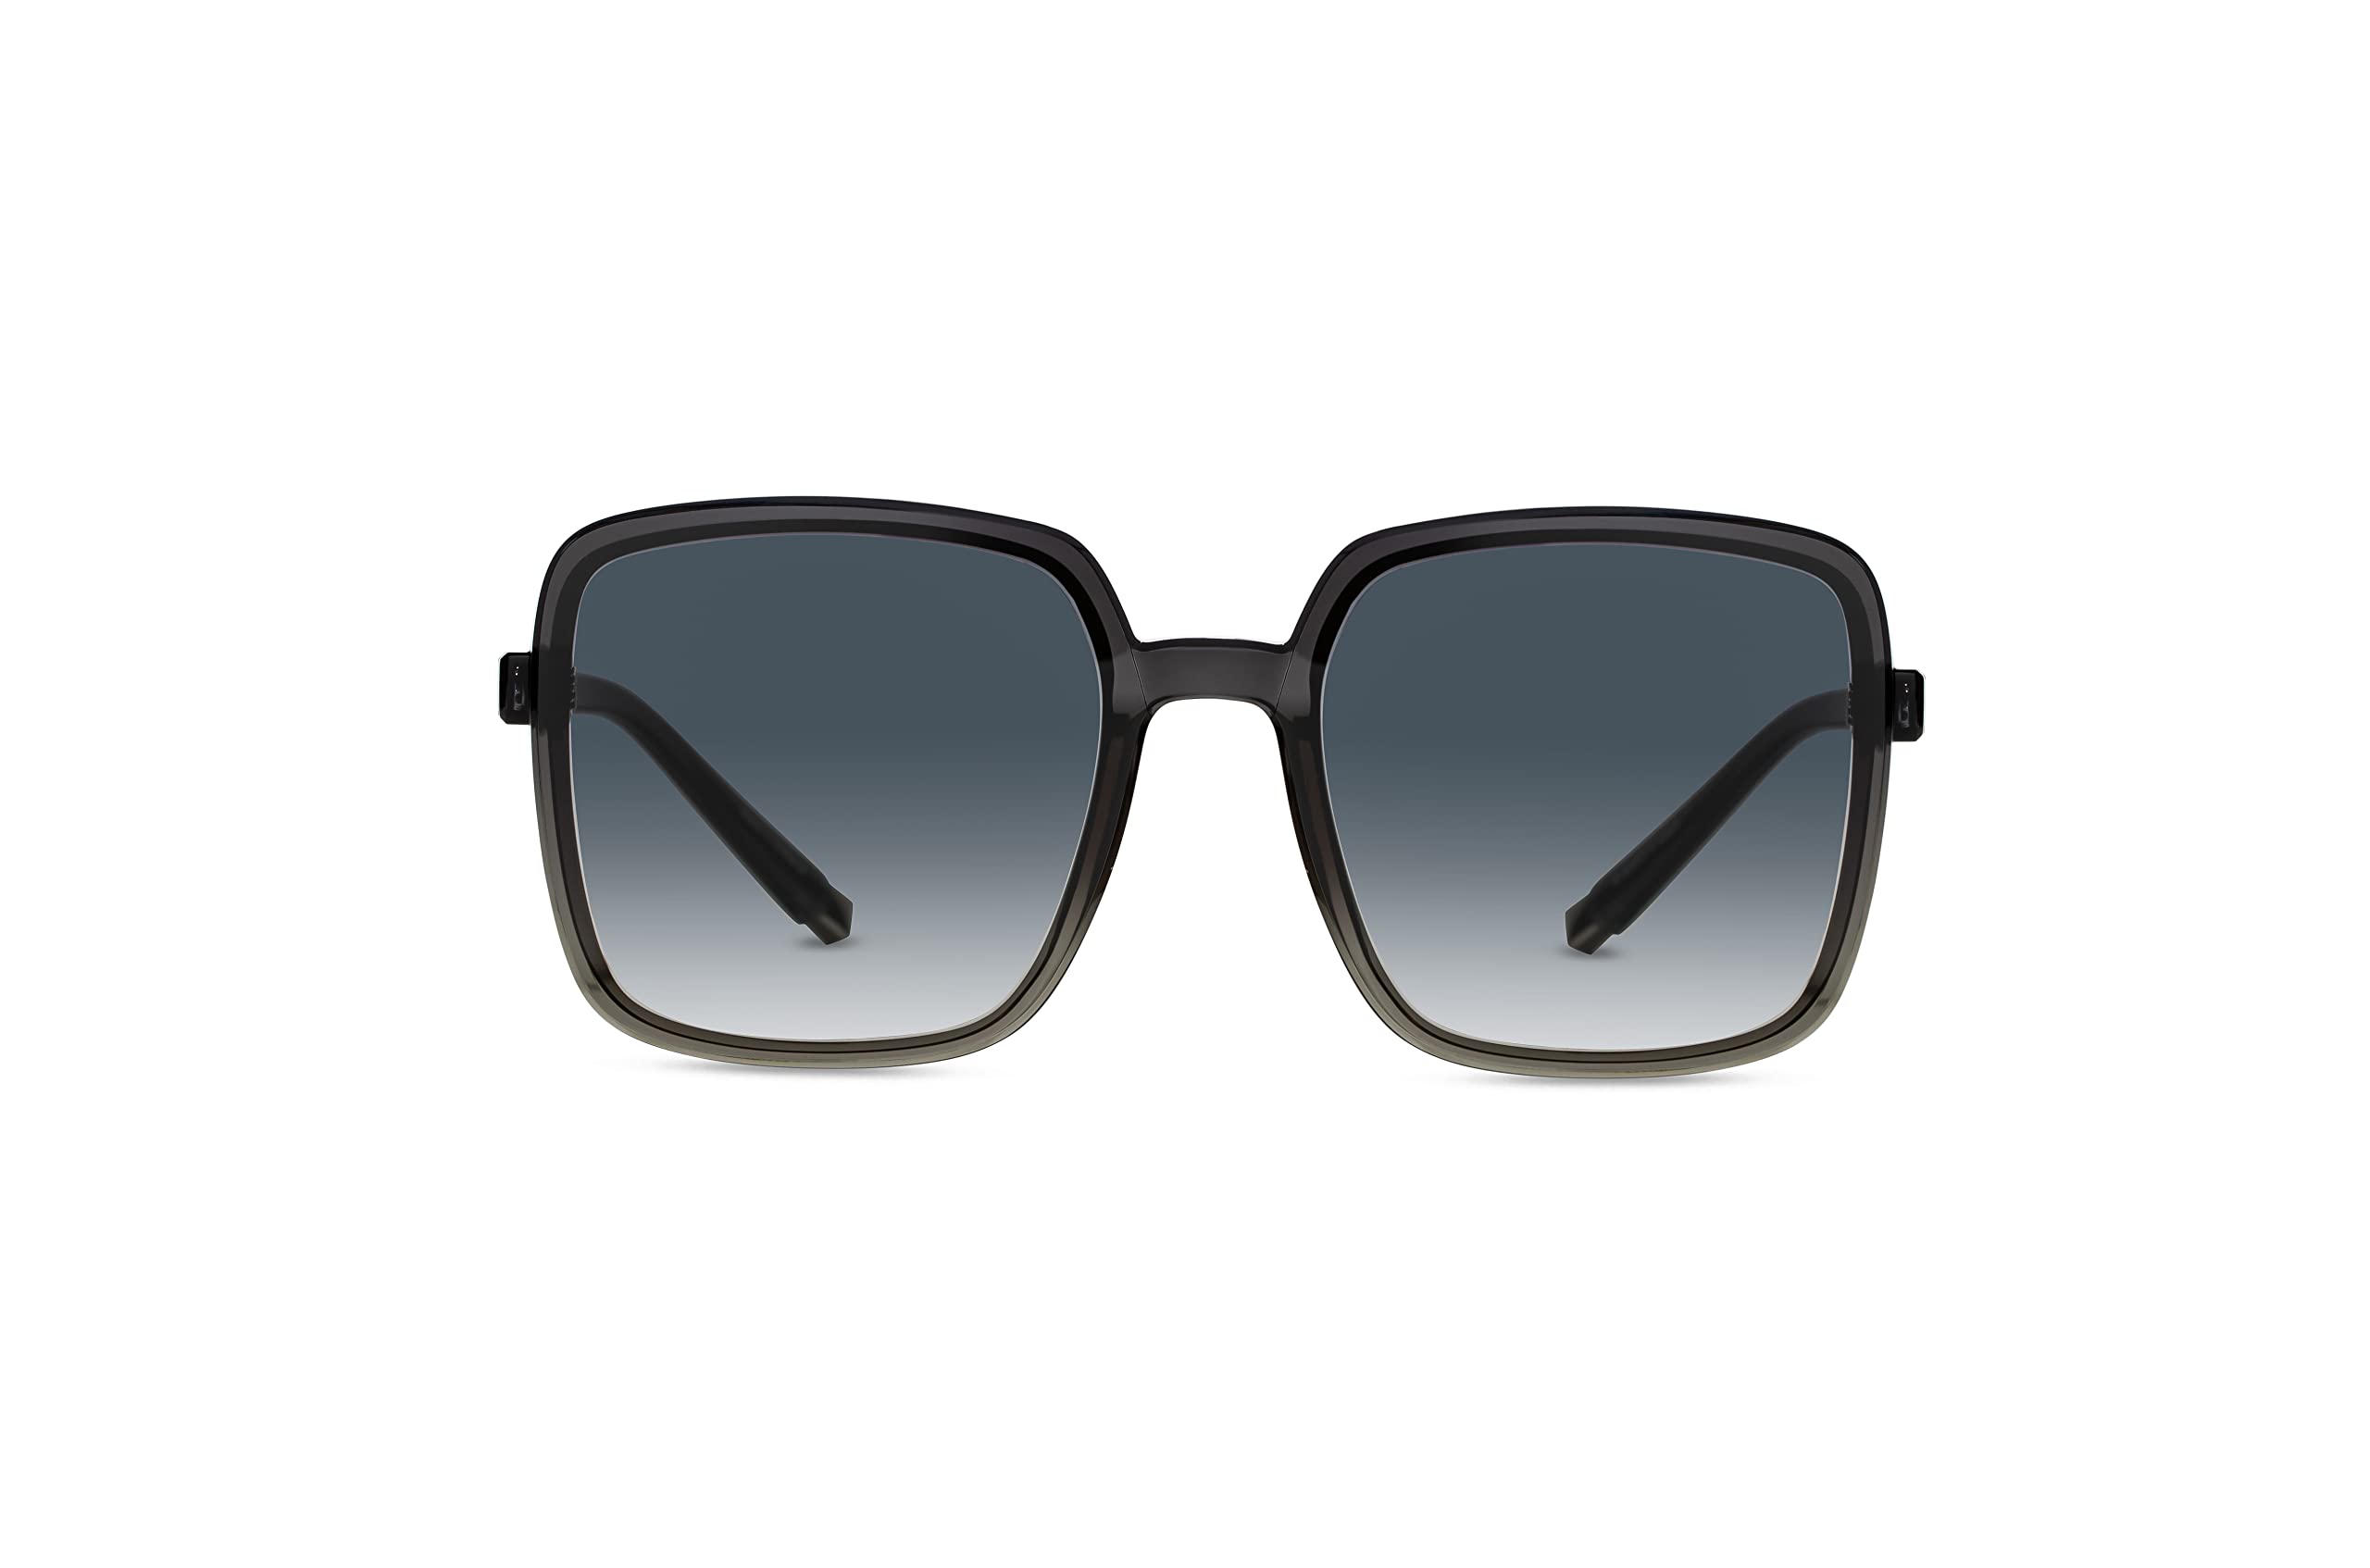 NEWSTE UV Protection Sunglasses Men Women Uv Blocking Sun Glasses Driving Fashion Style